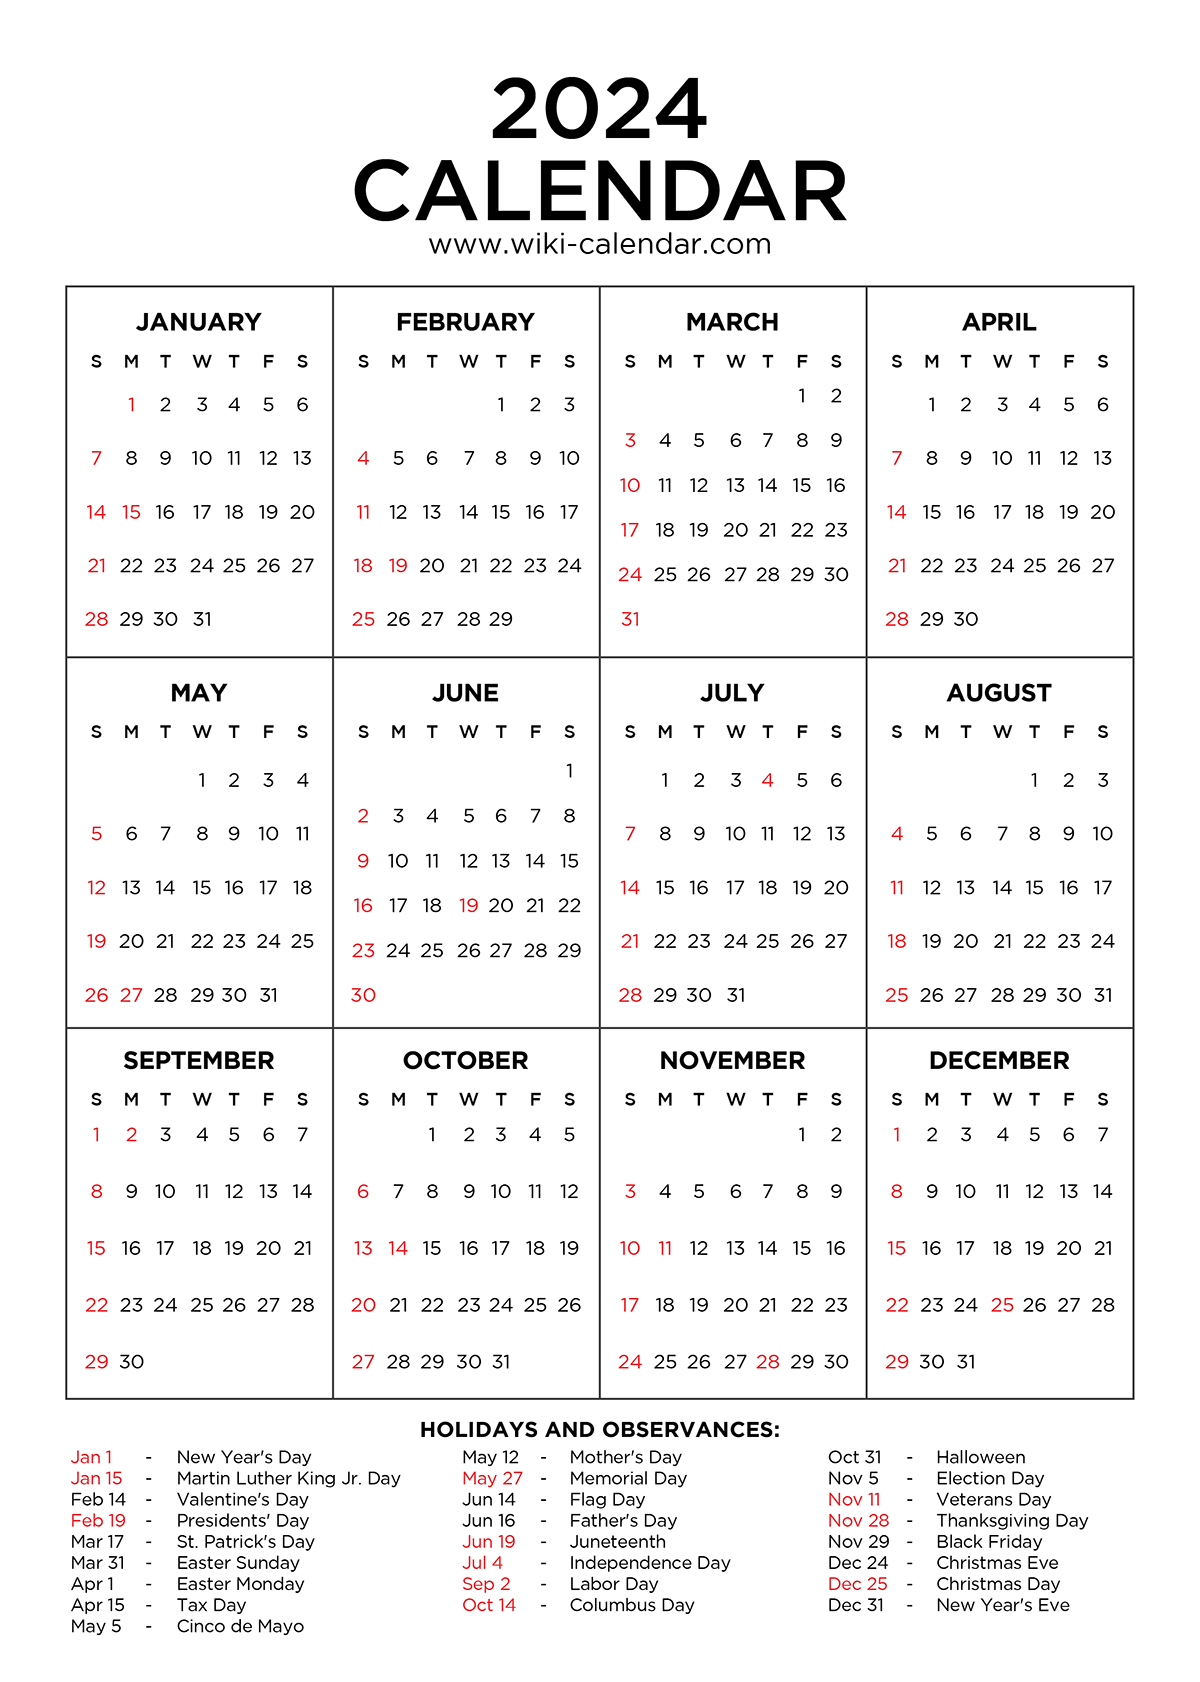 Year 2024 Calendar Printable With Holidays - Wiki Calendar | Printable Calendar 2024 With Us Holidays Free Download